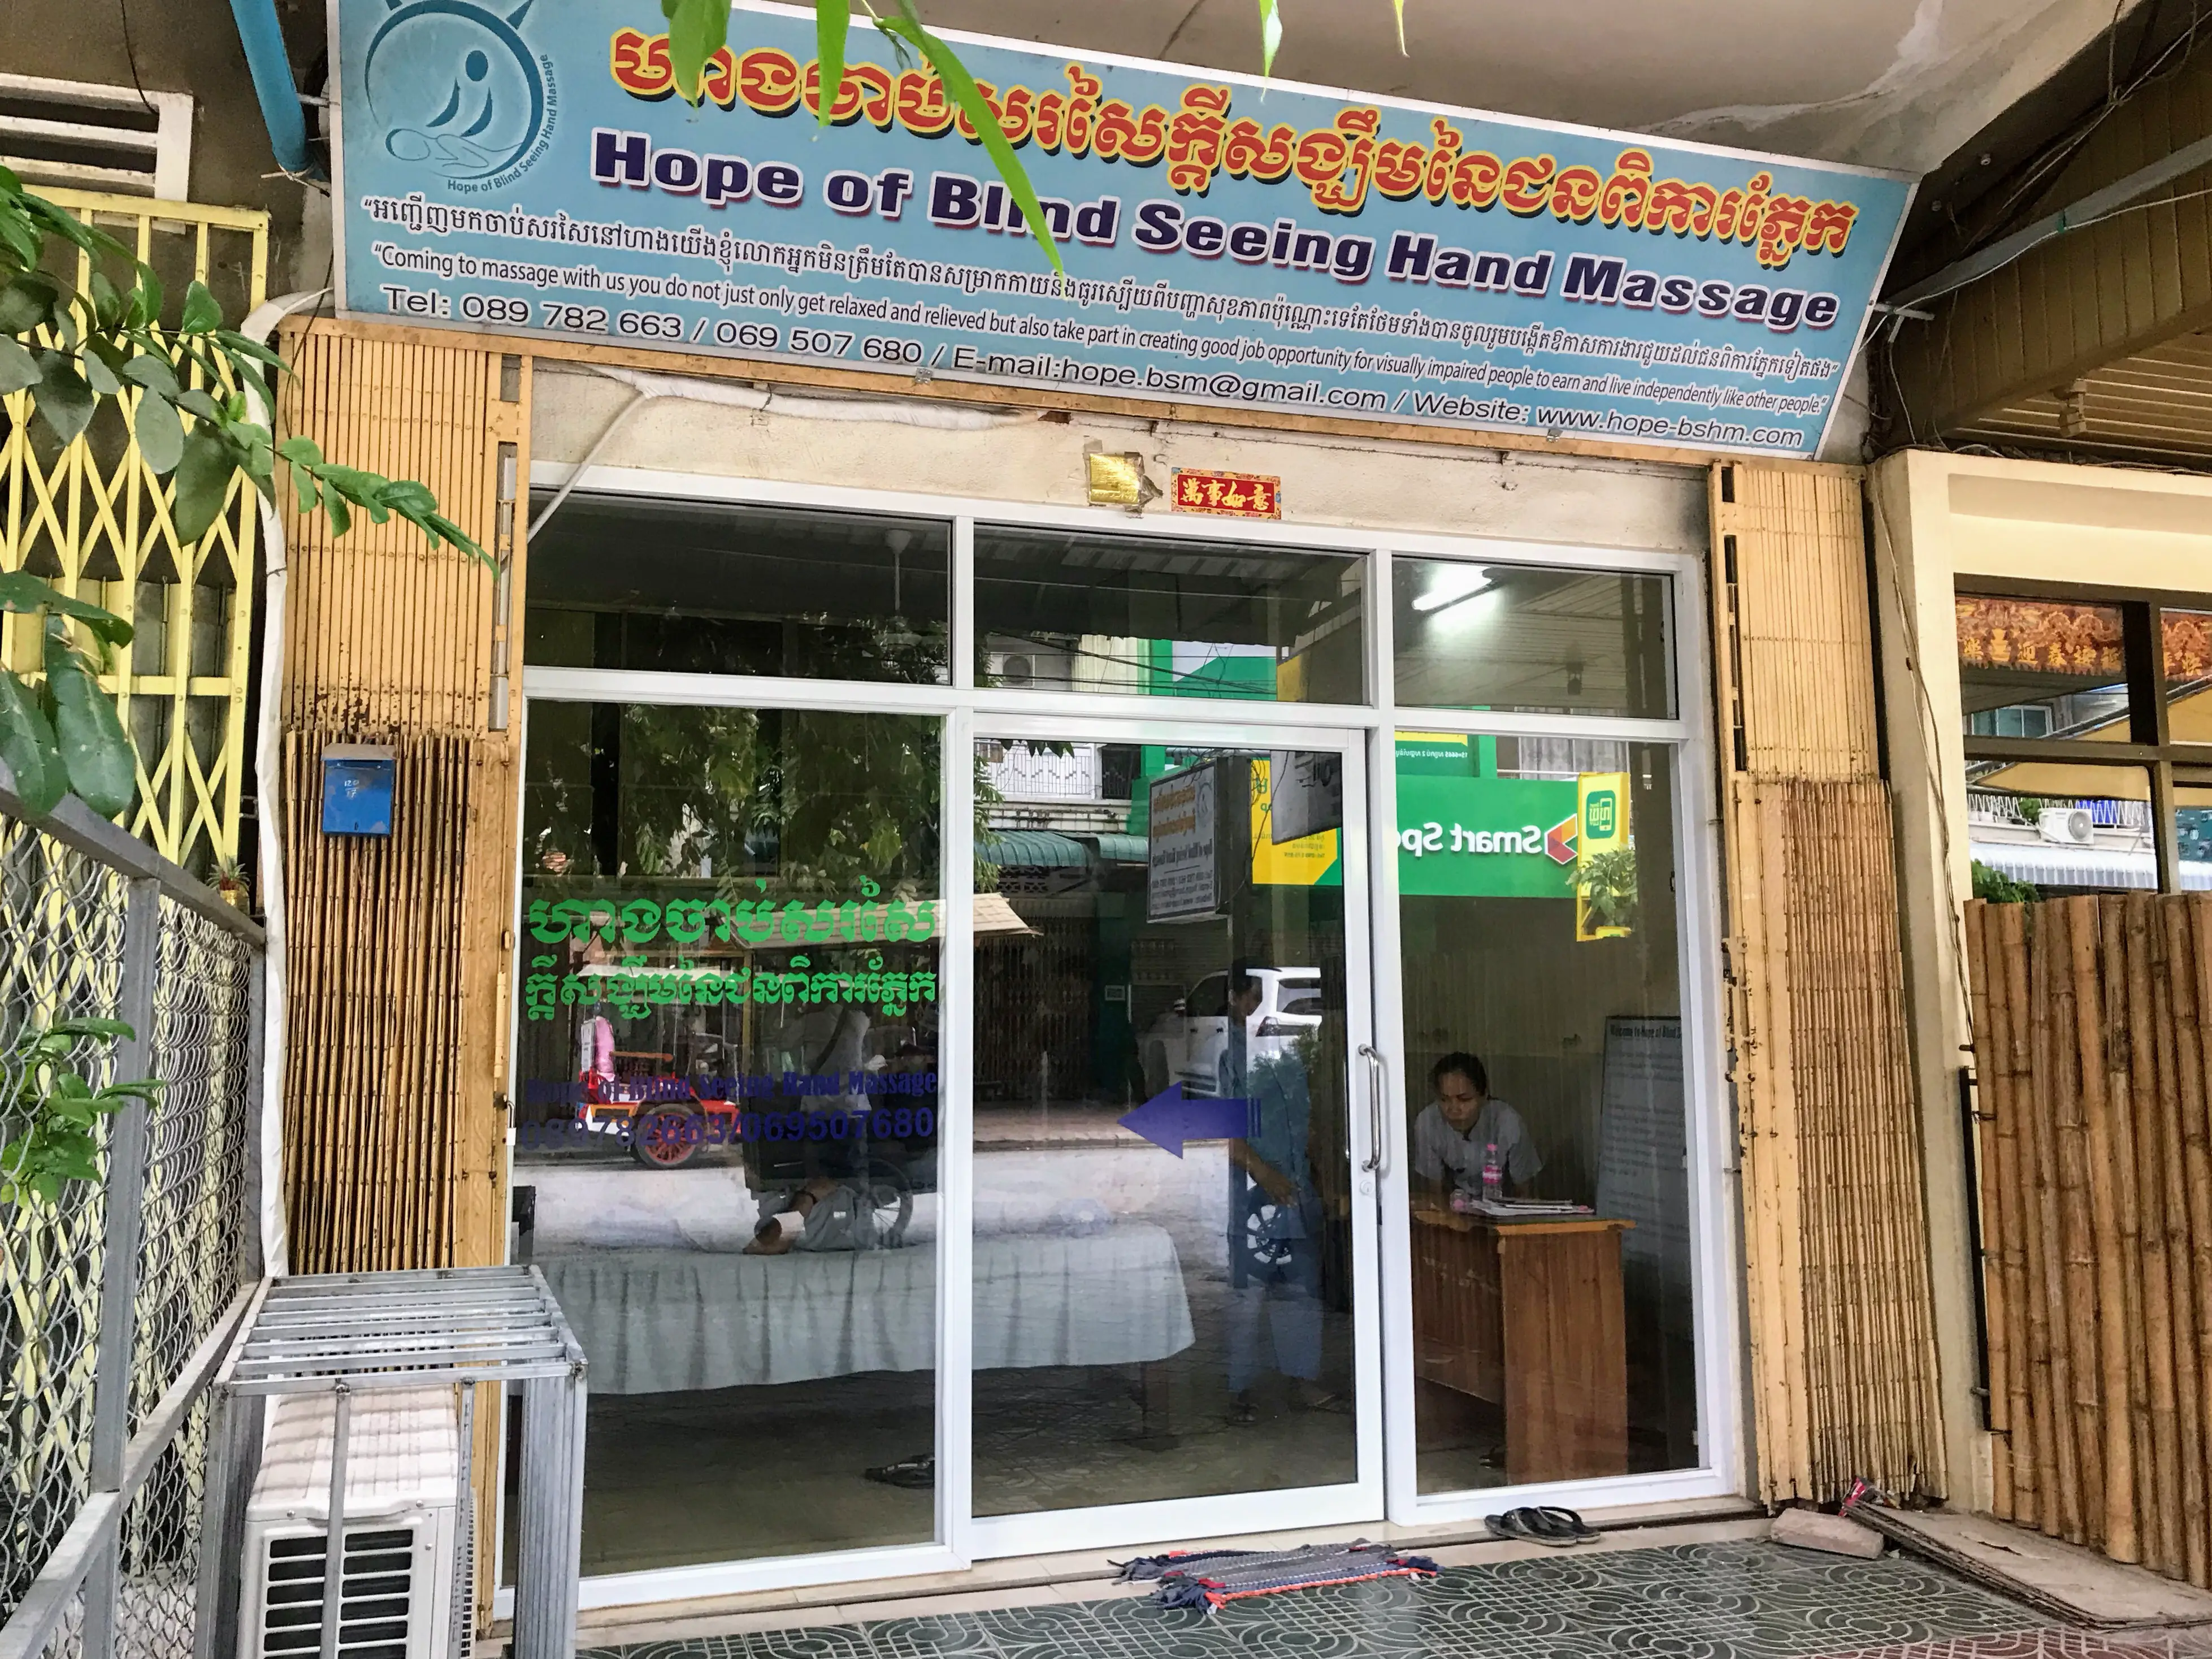 Hope of Blind Seeing Hand Massage, Cambodia